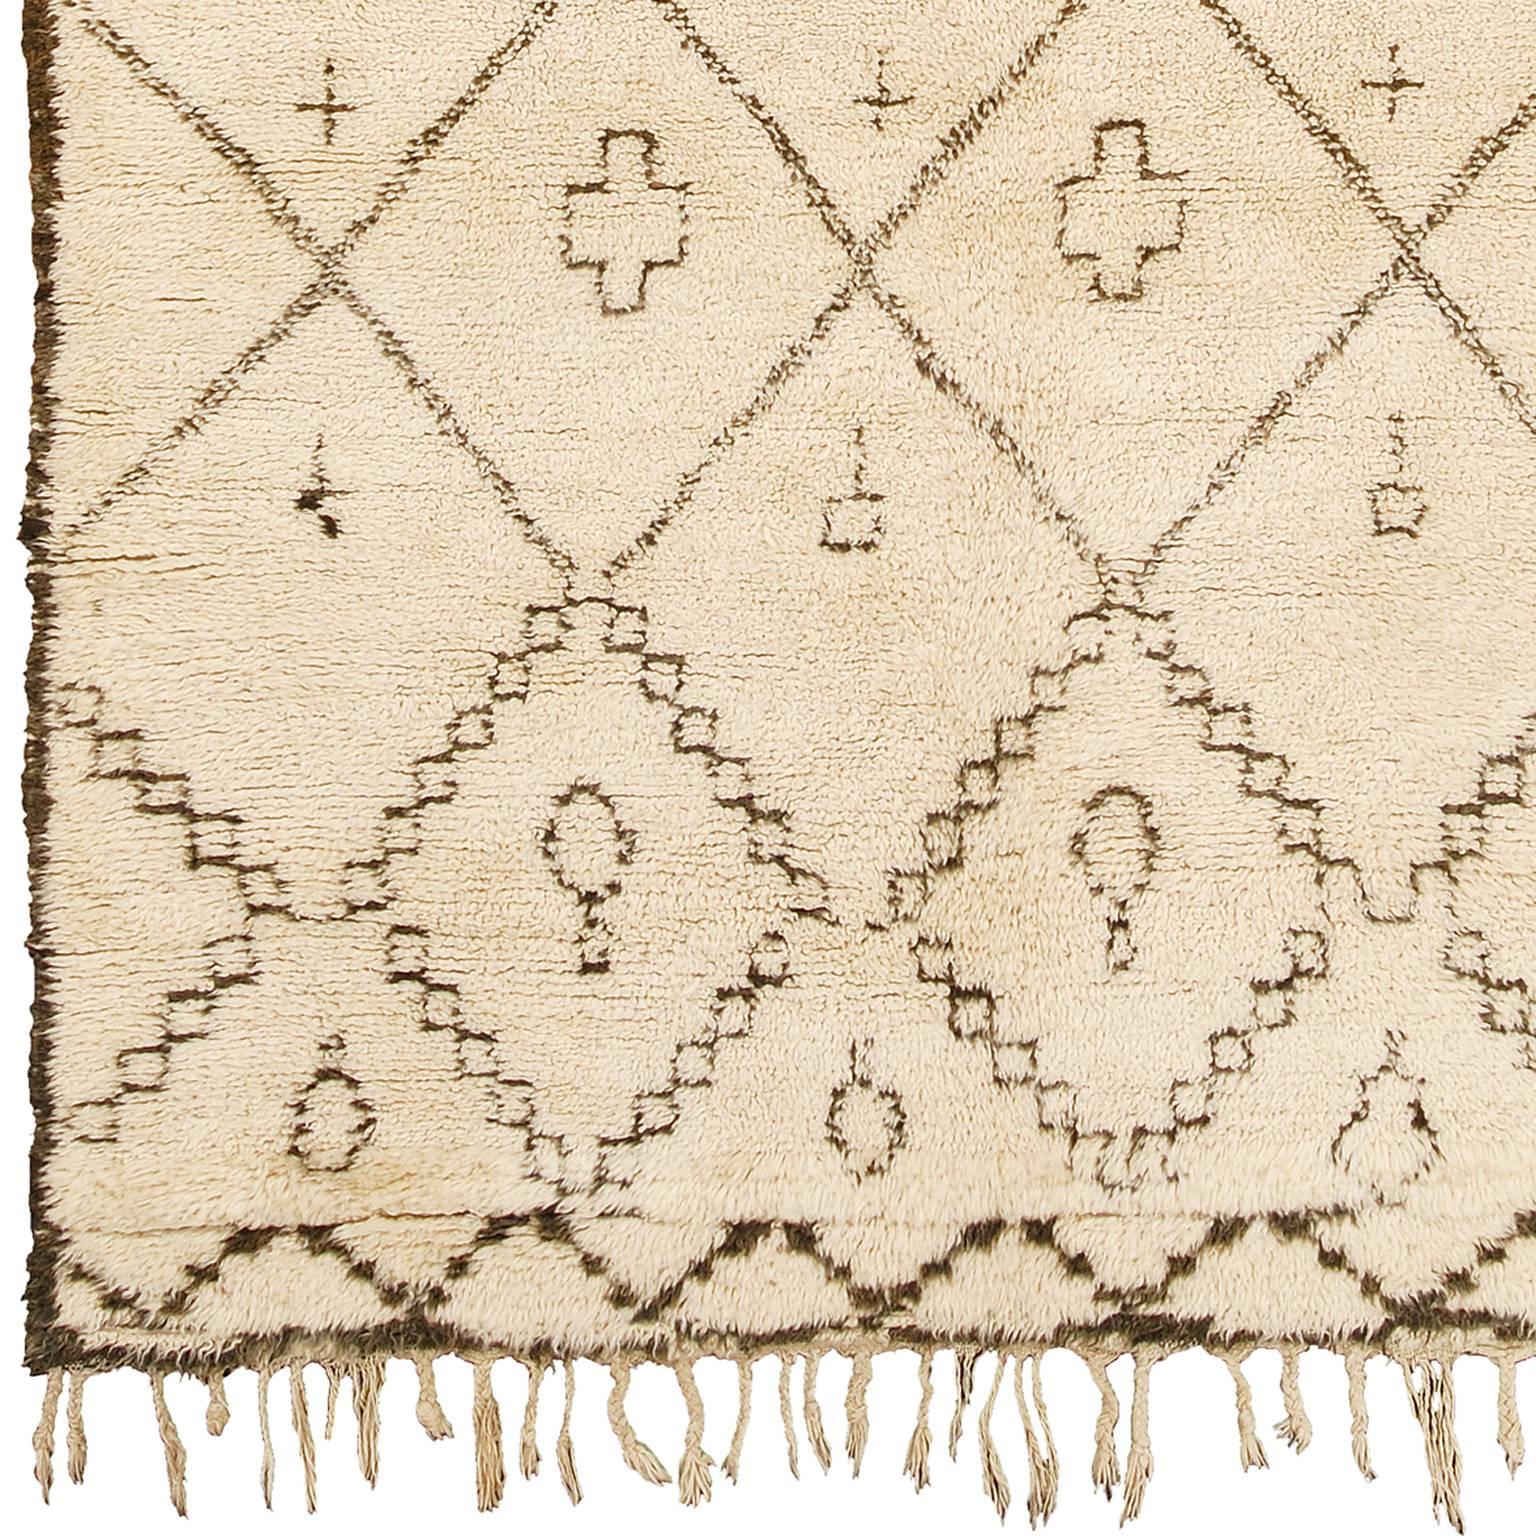 Mid-20th century Moroccan Beni Ourain rug
Morocco, circa mid-20th century
Handwoven.
 